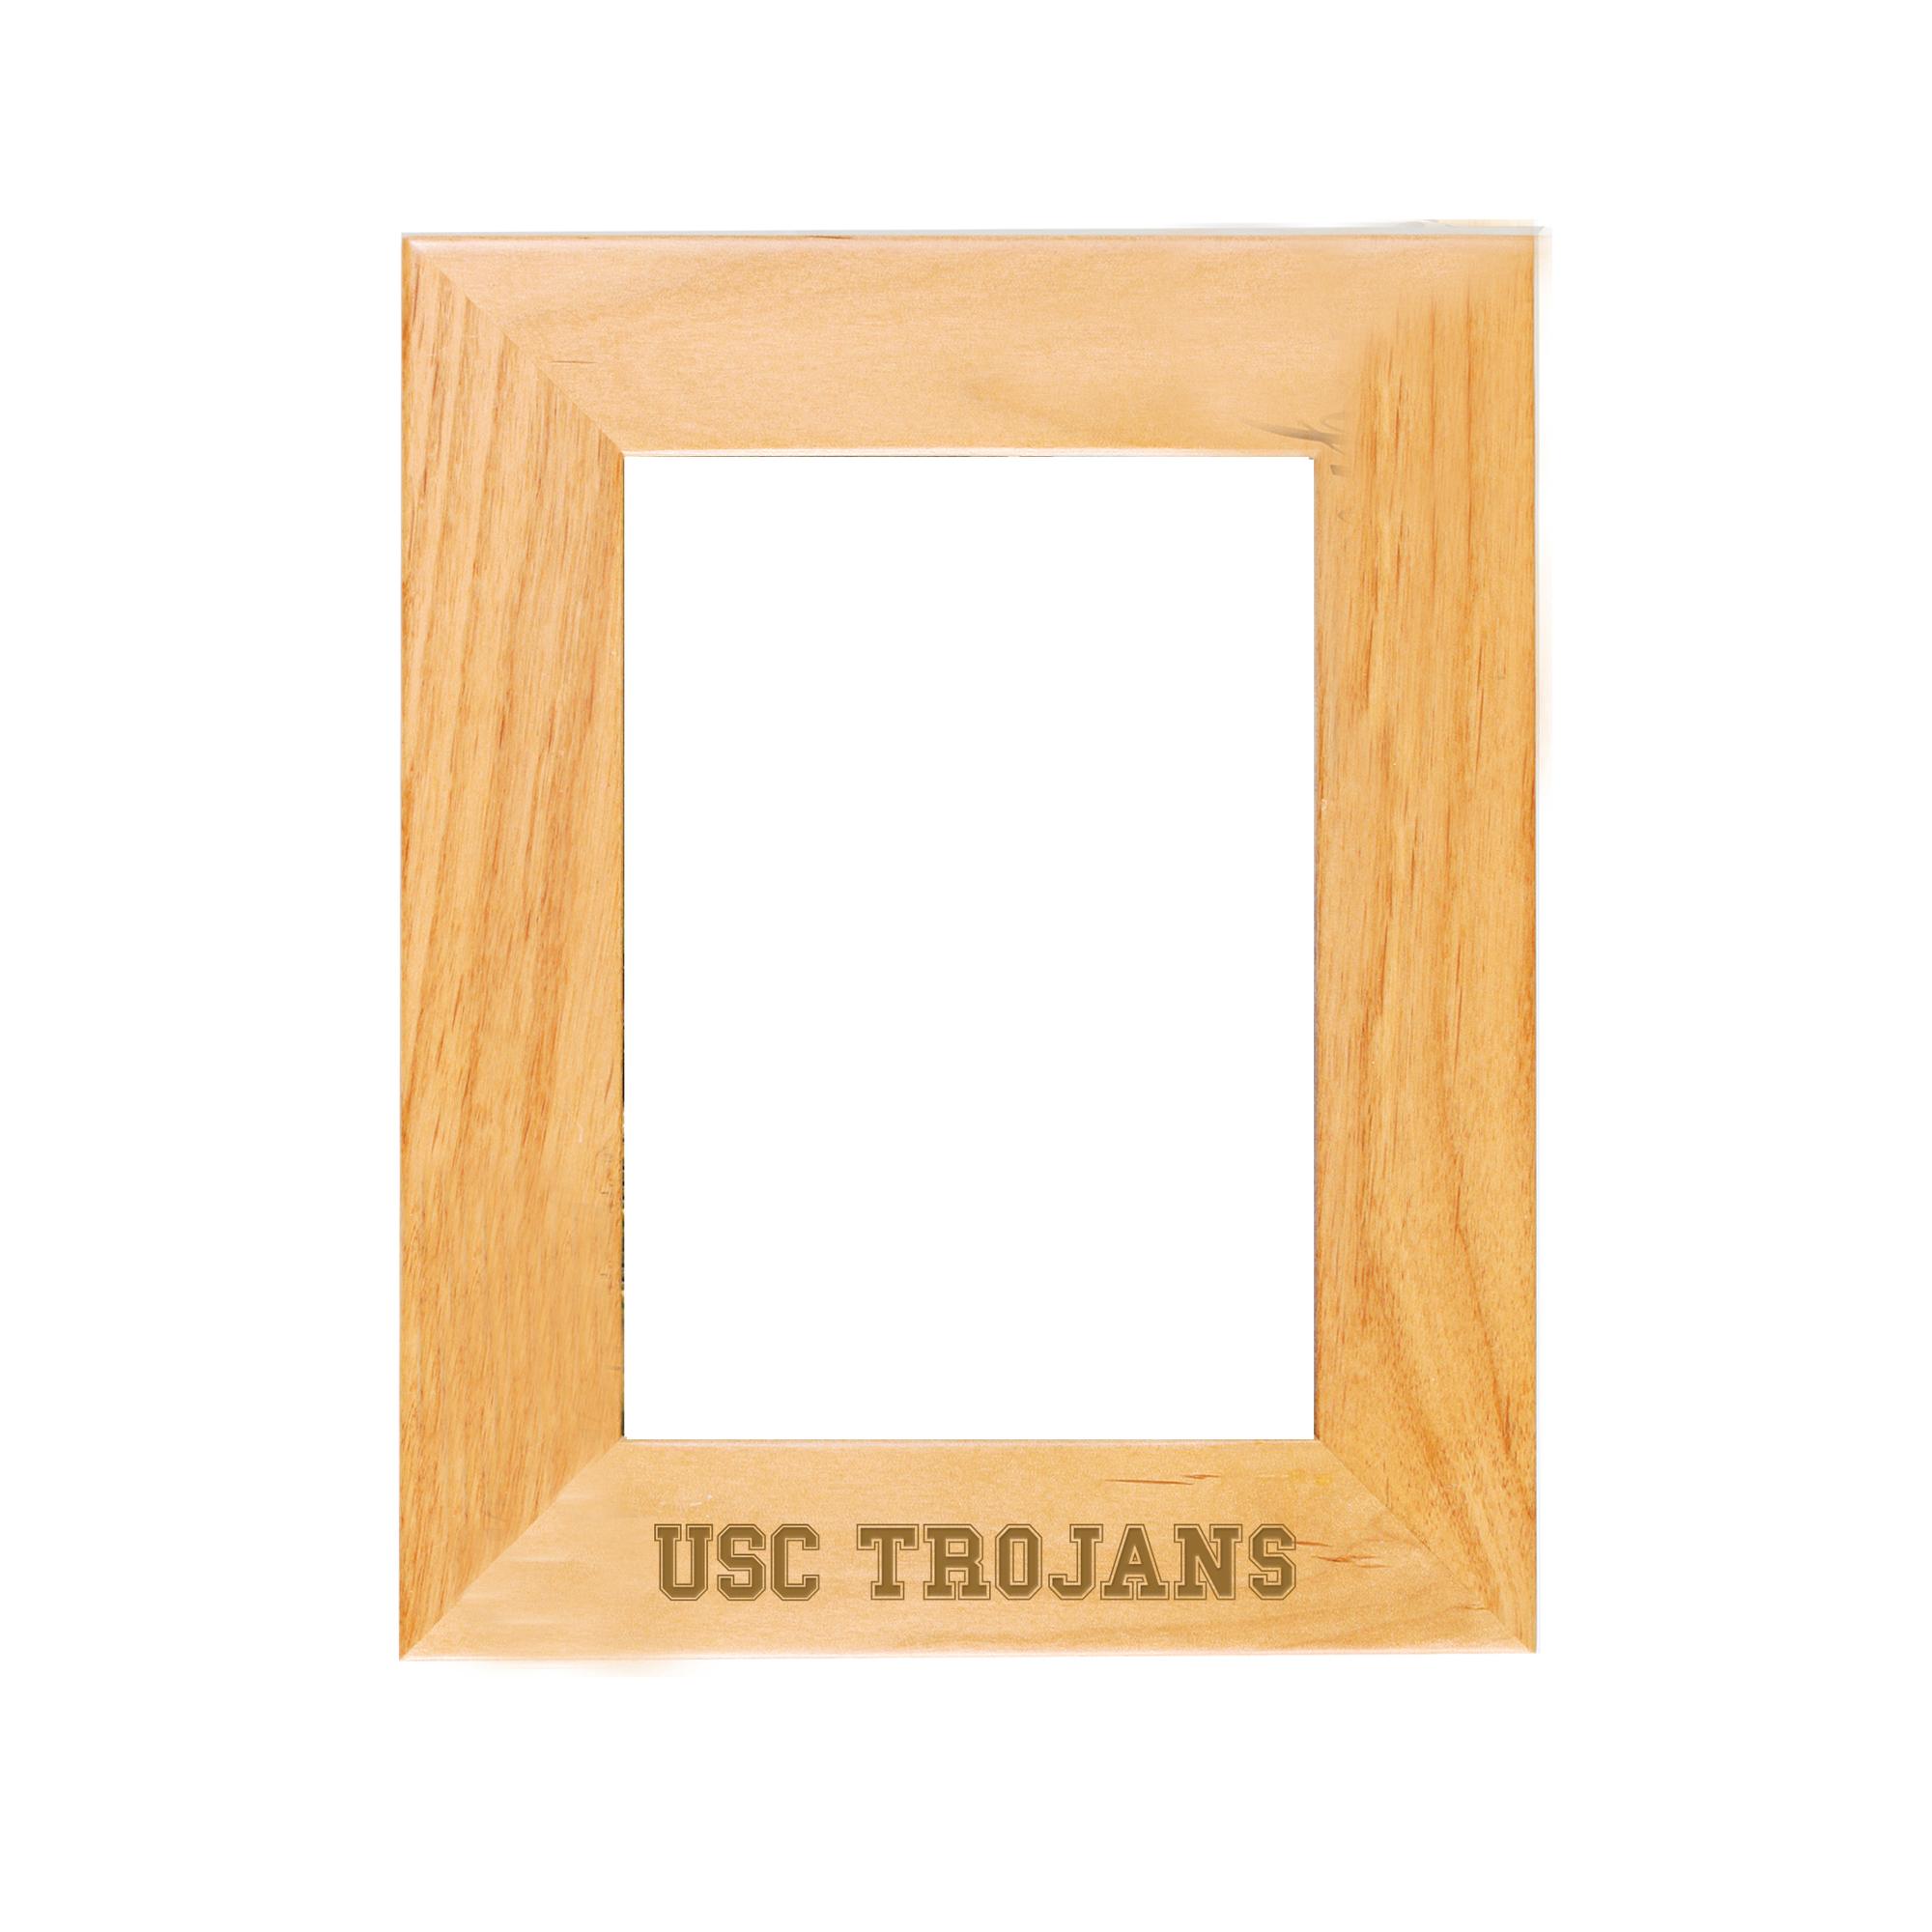 USC Trojans Alderwood 5" x 7" Photo Frame By Spirit image01